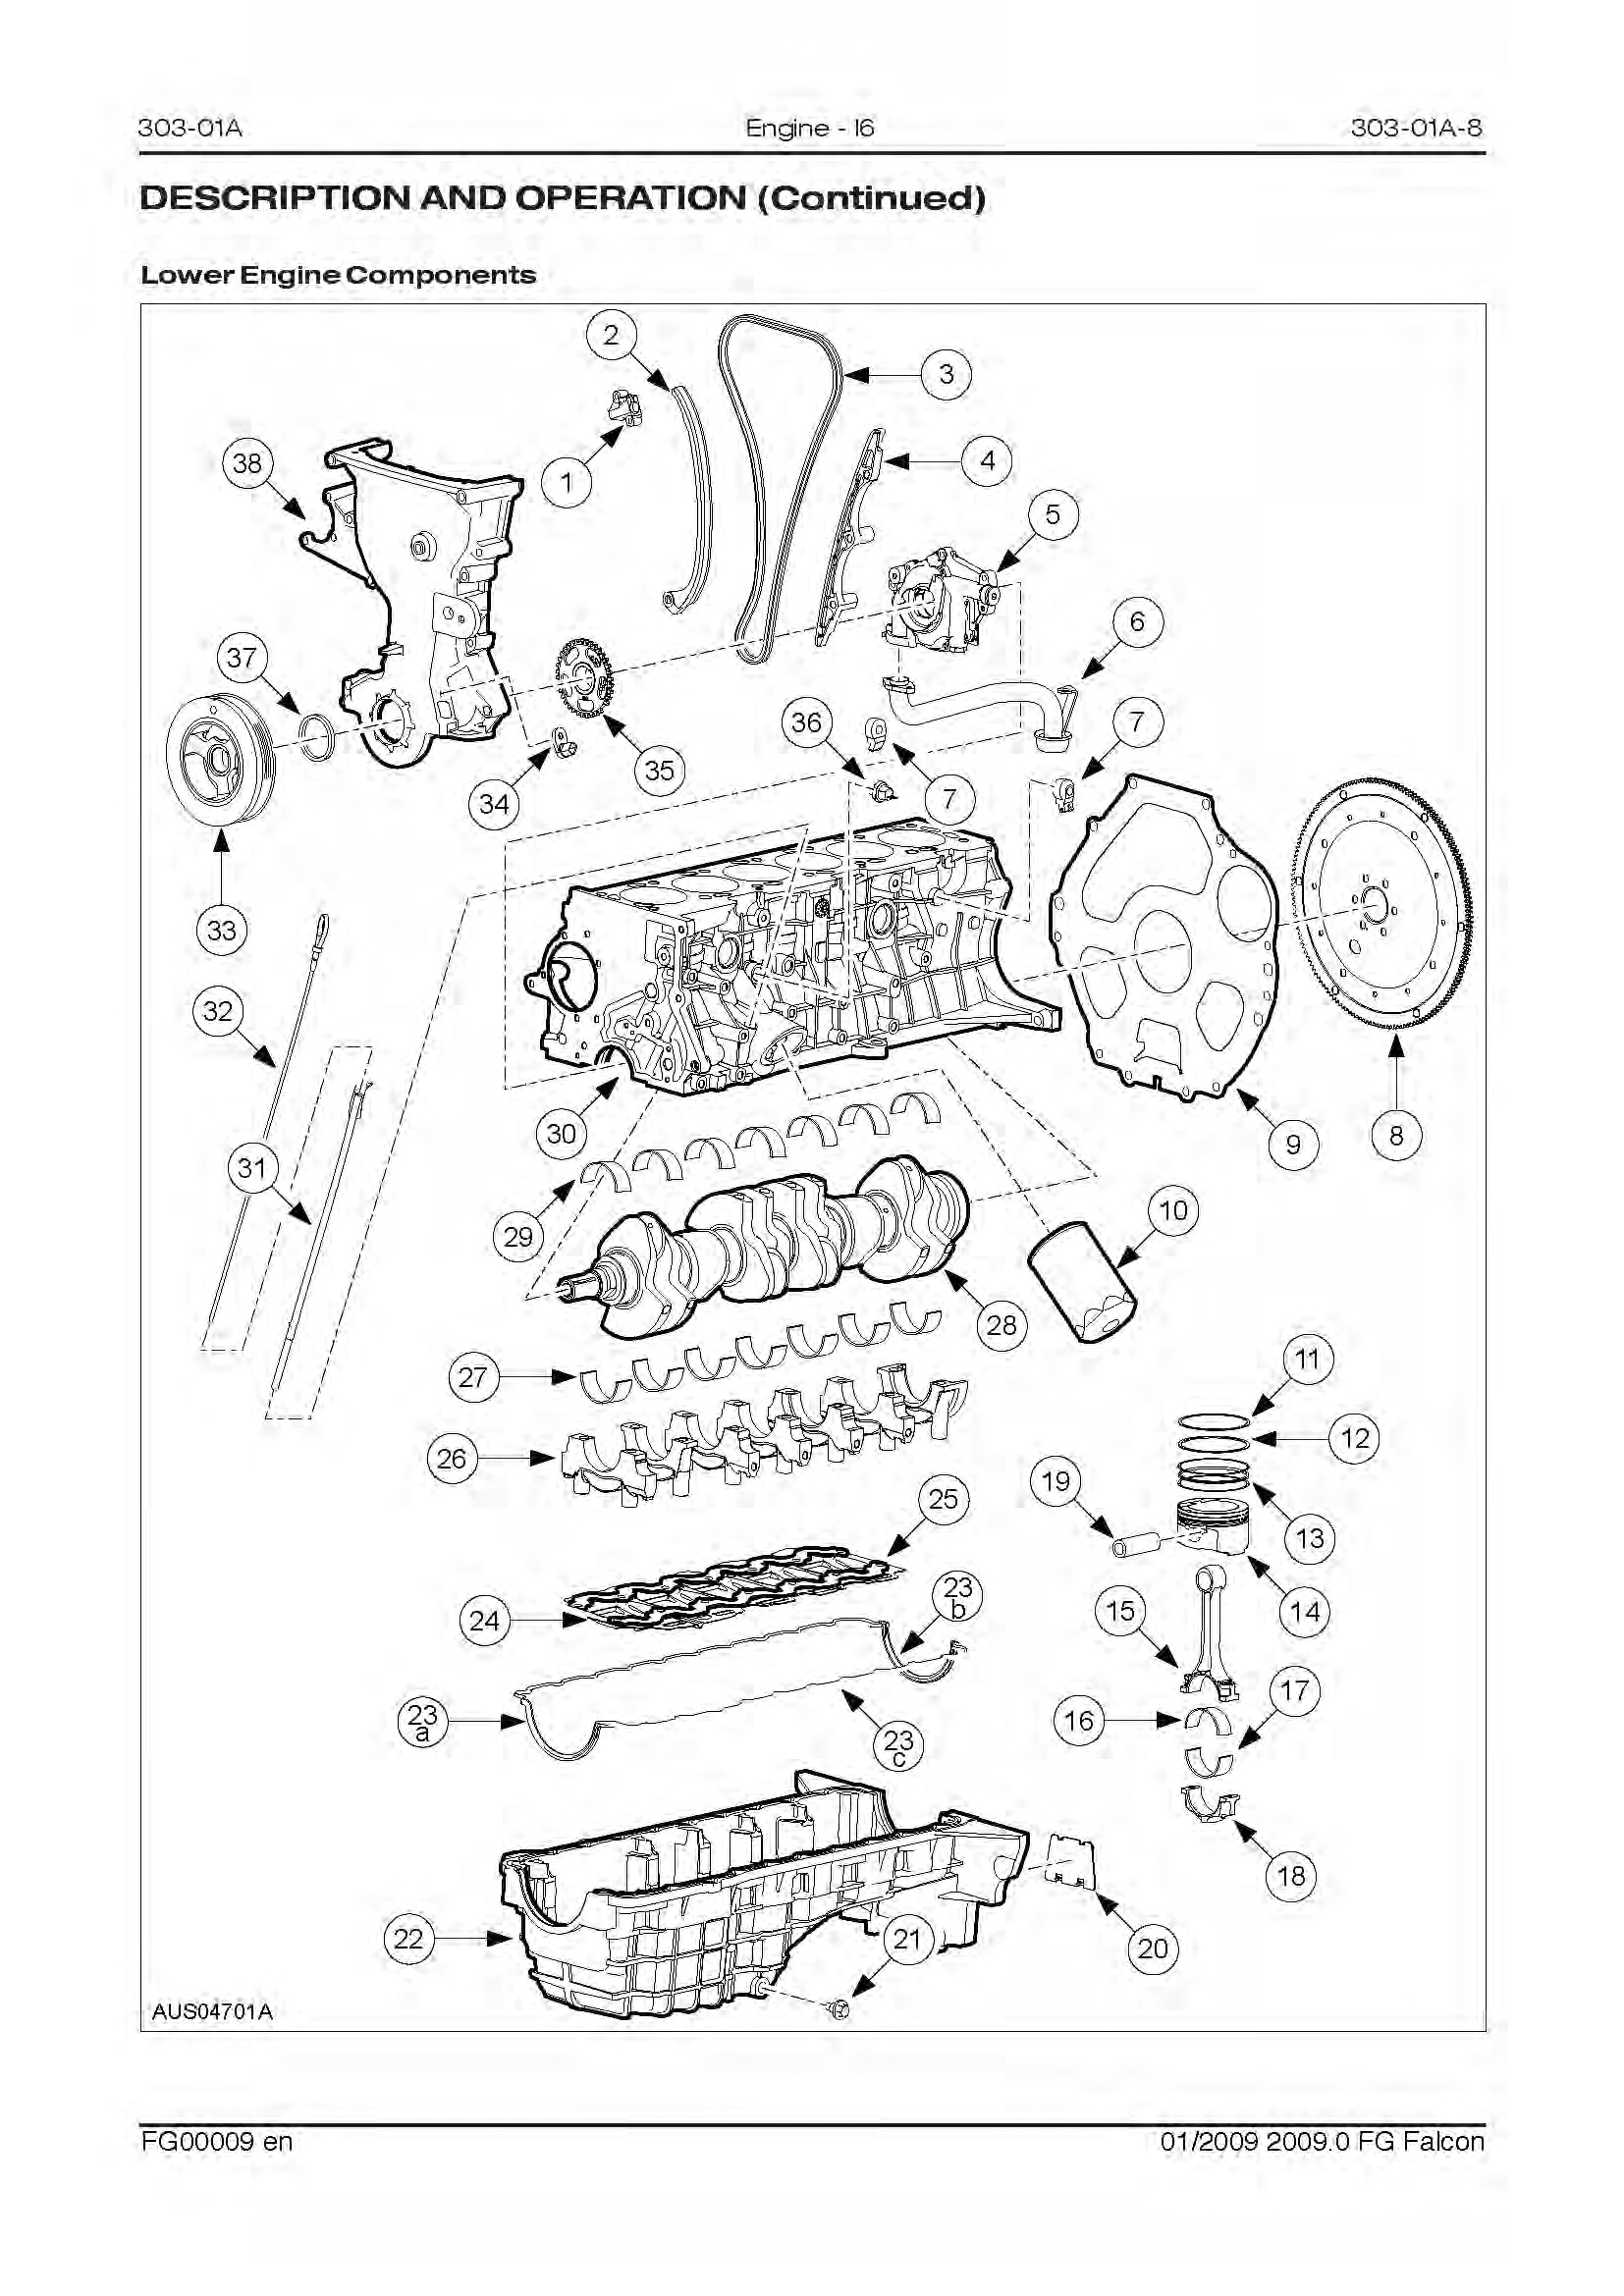 2014 Ford Falcon Repair Manual Engine L6